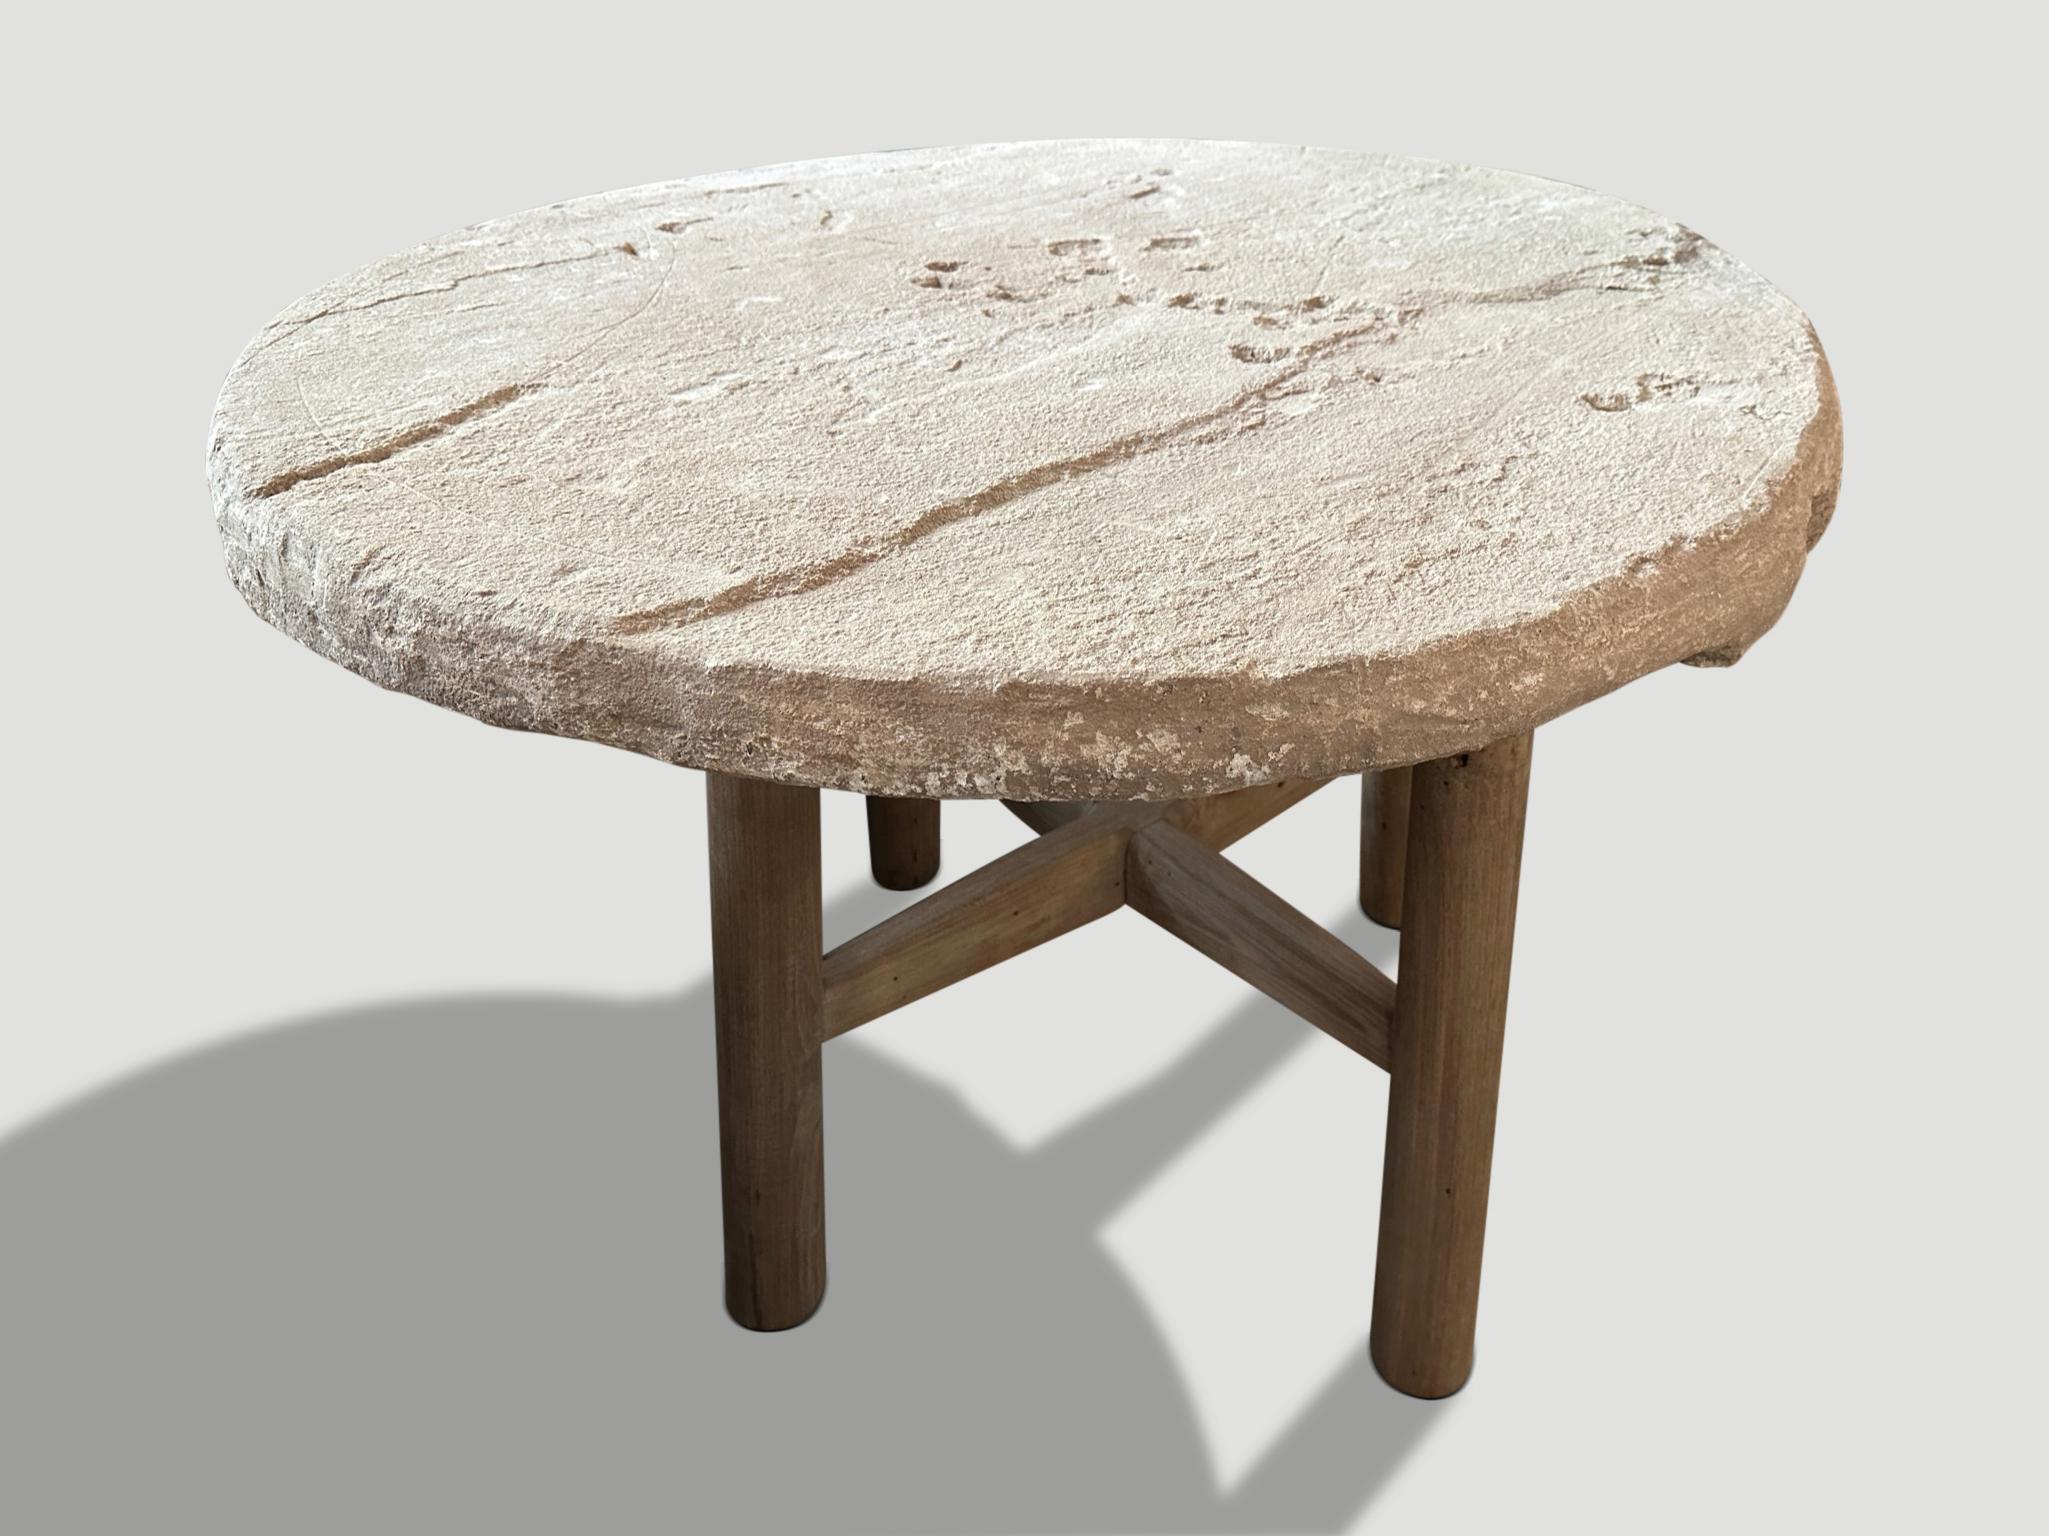 Primitive Andrianna Shamaris Sumba Stone Round Table For Sale